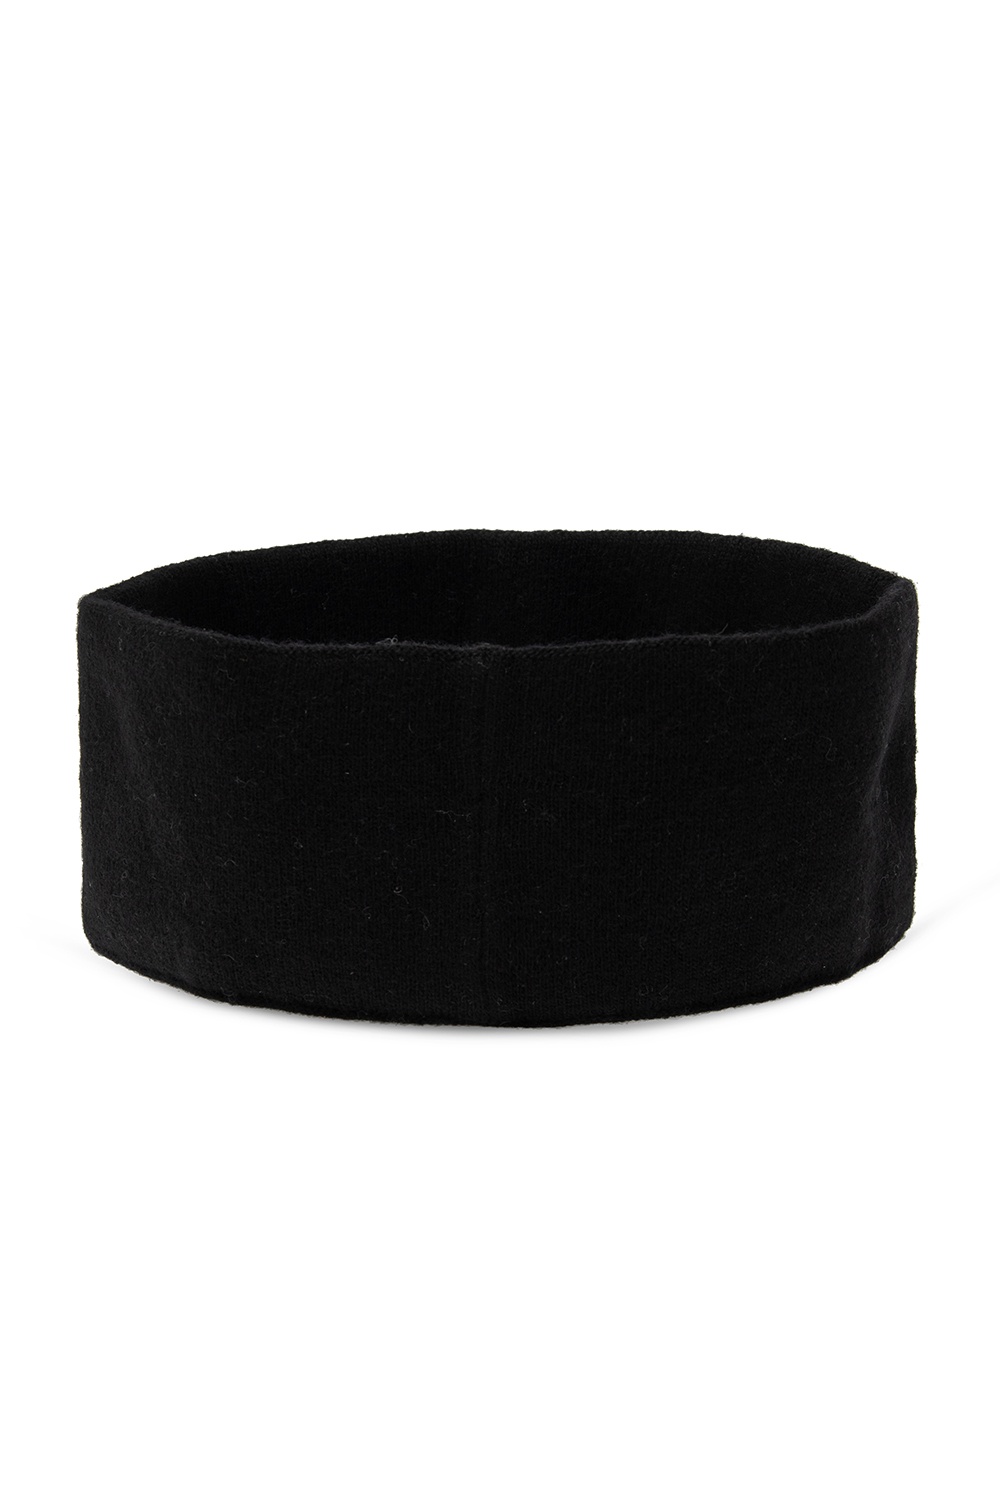 black moschino headband